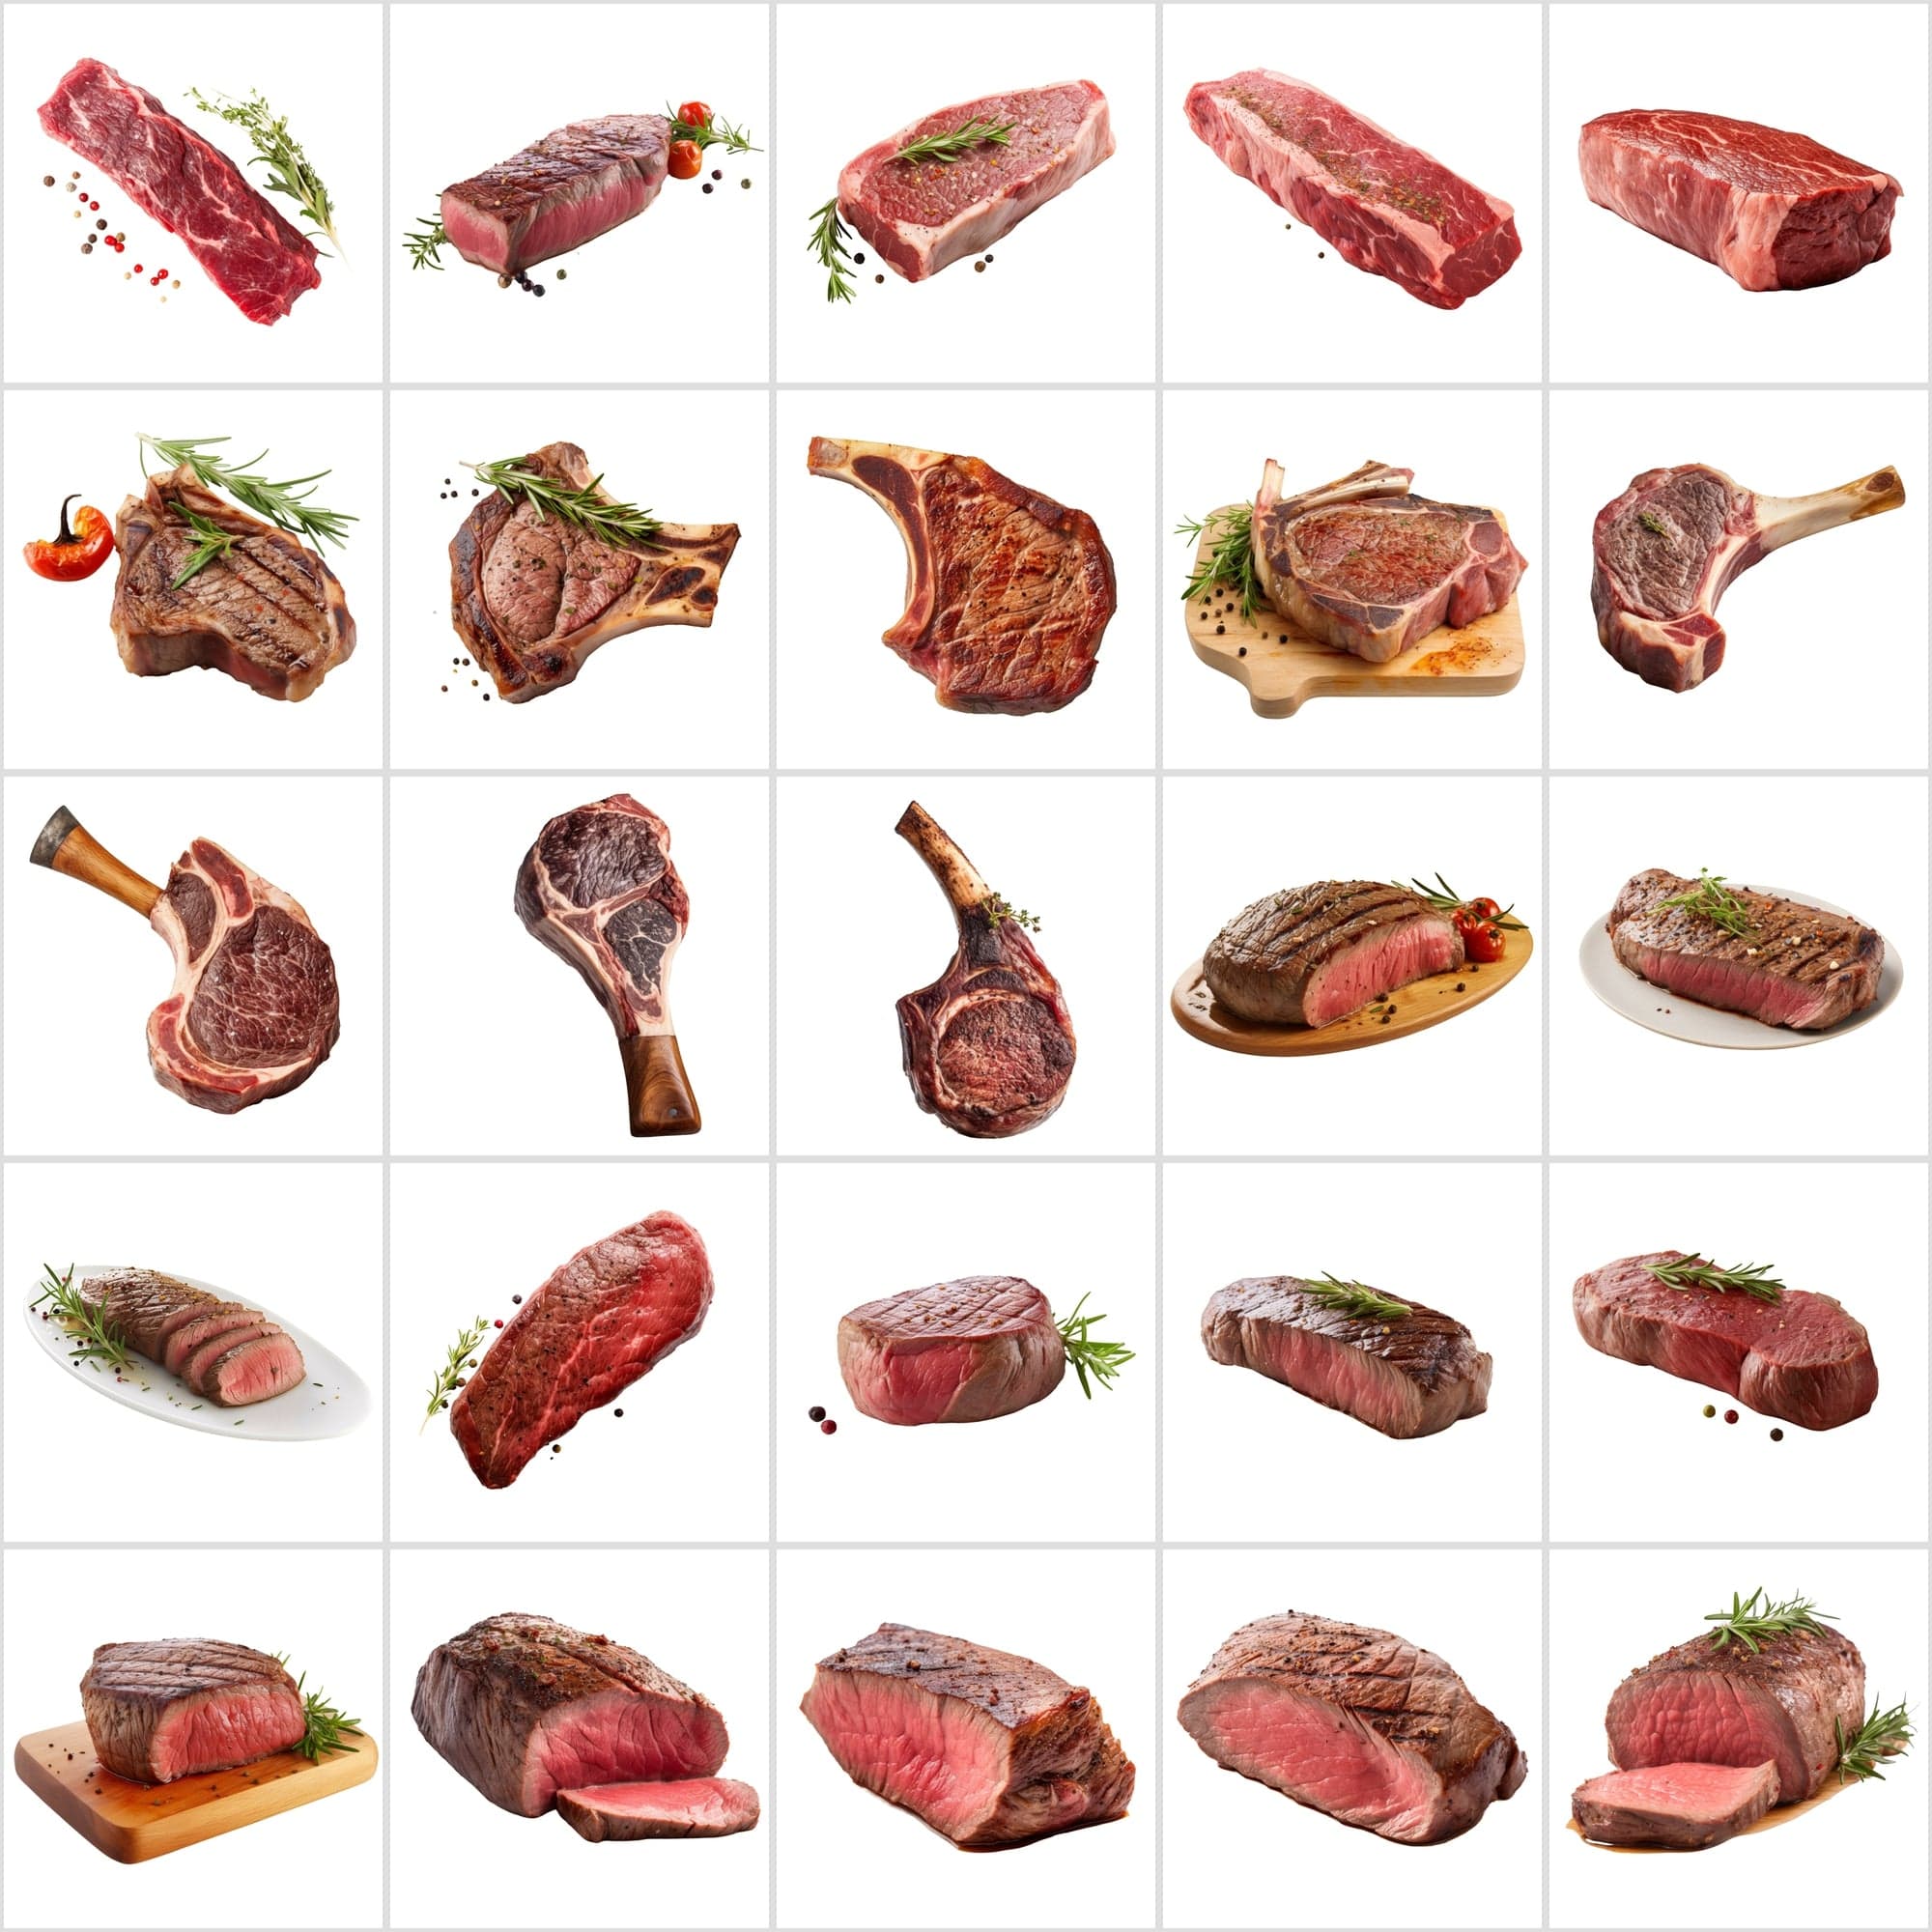 190 Steak and Meat Cut Images with Transparent Background Digital Download Sumobundle